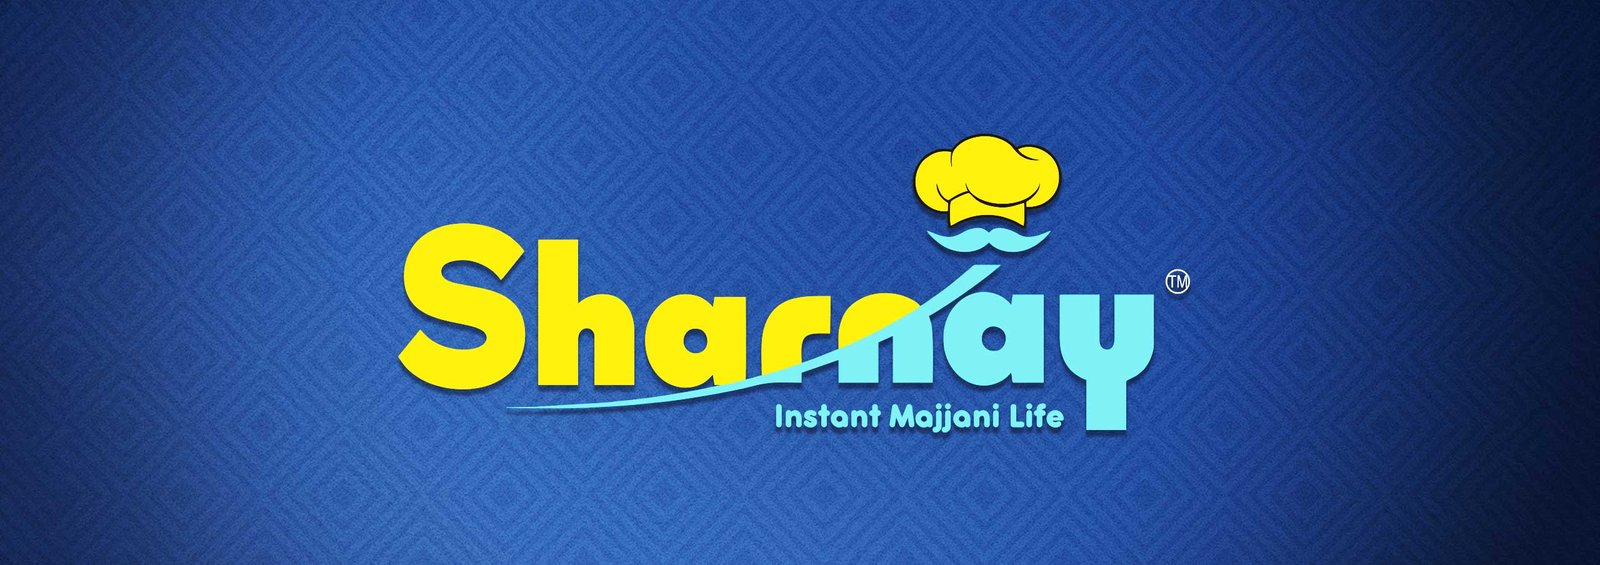 Sharnay logo design